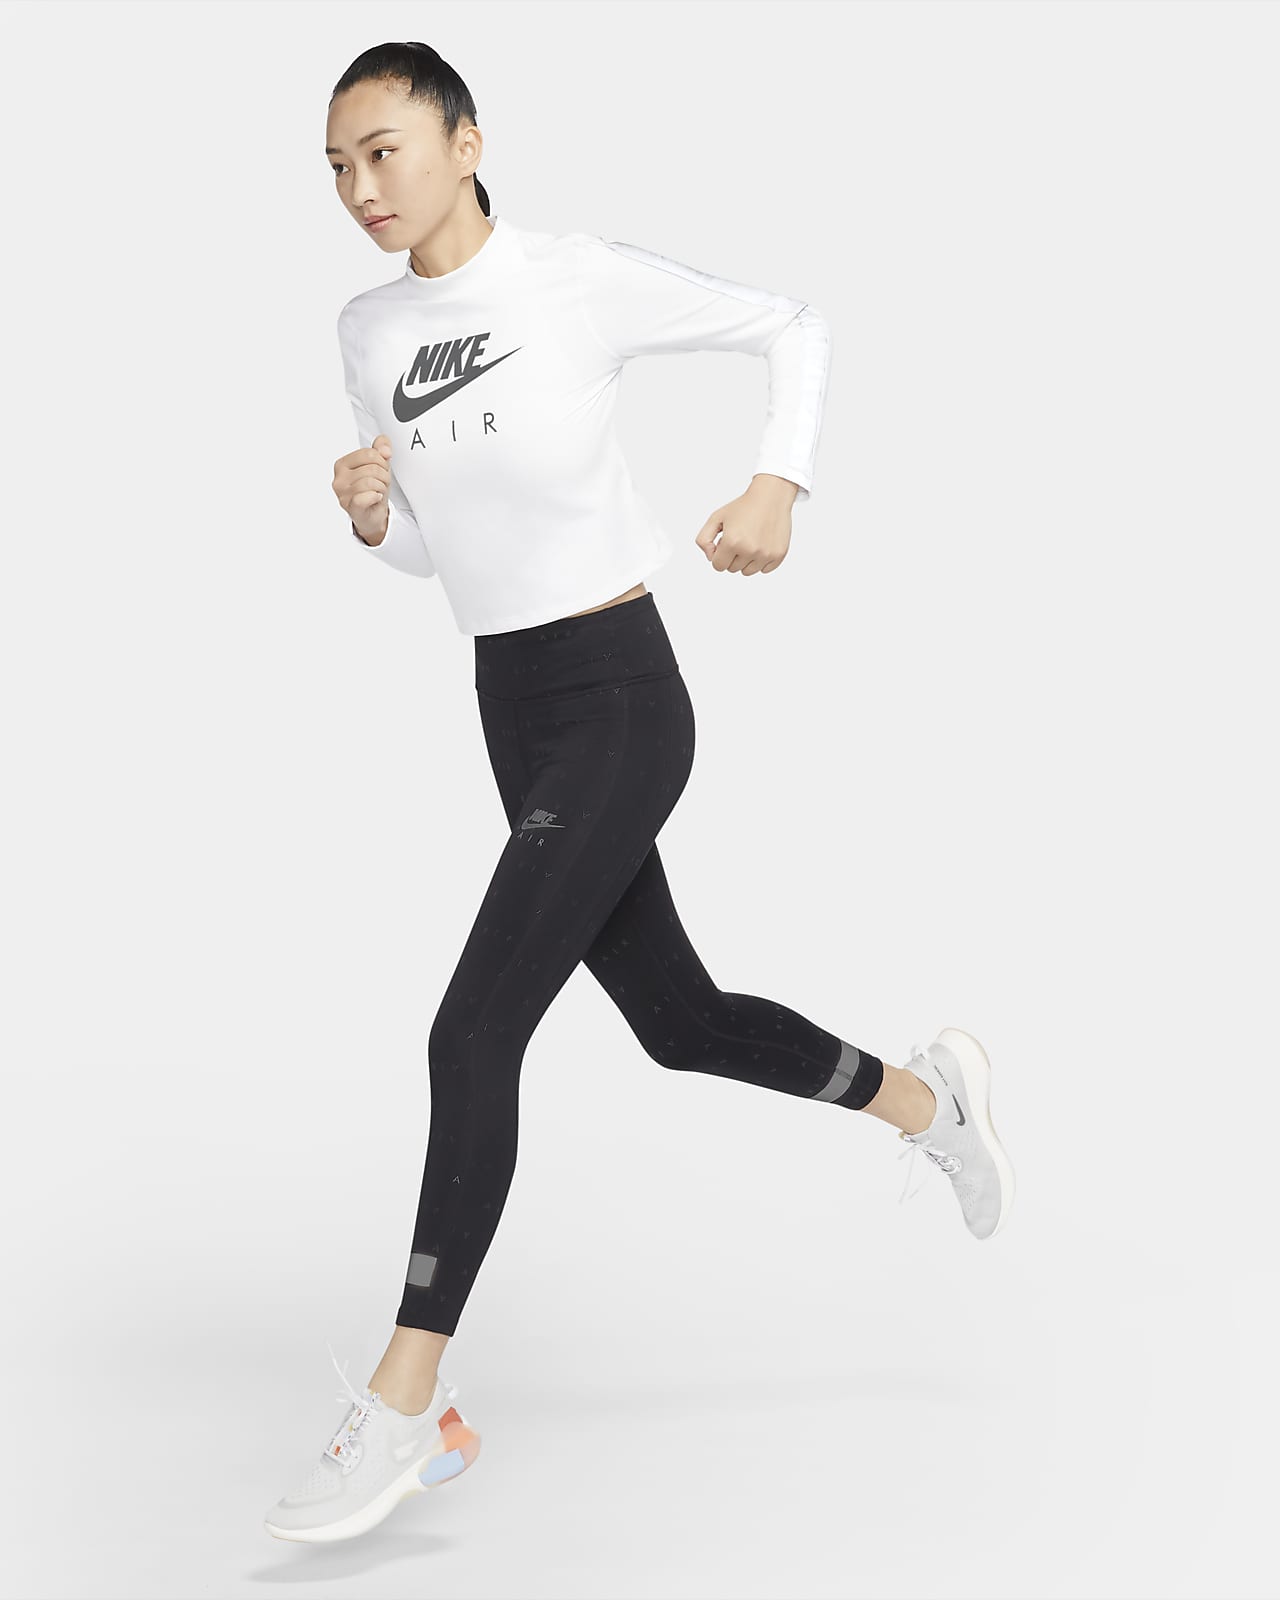 Nike公式 ナイキ エア ウィメンズ 7 8 ランニングタイツ オンラインストア 通販サイト